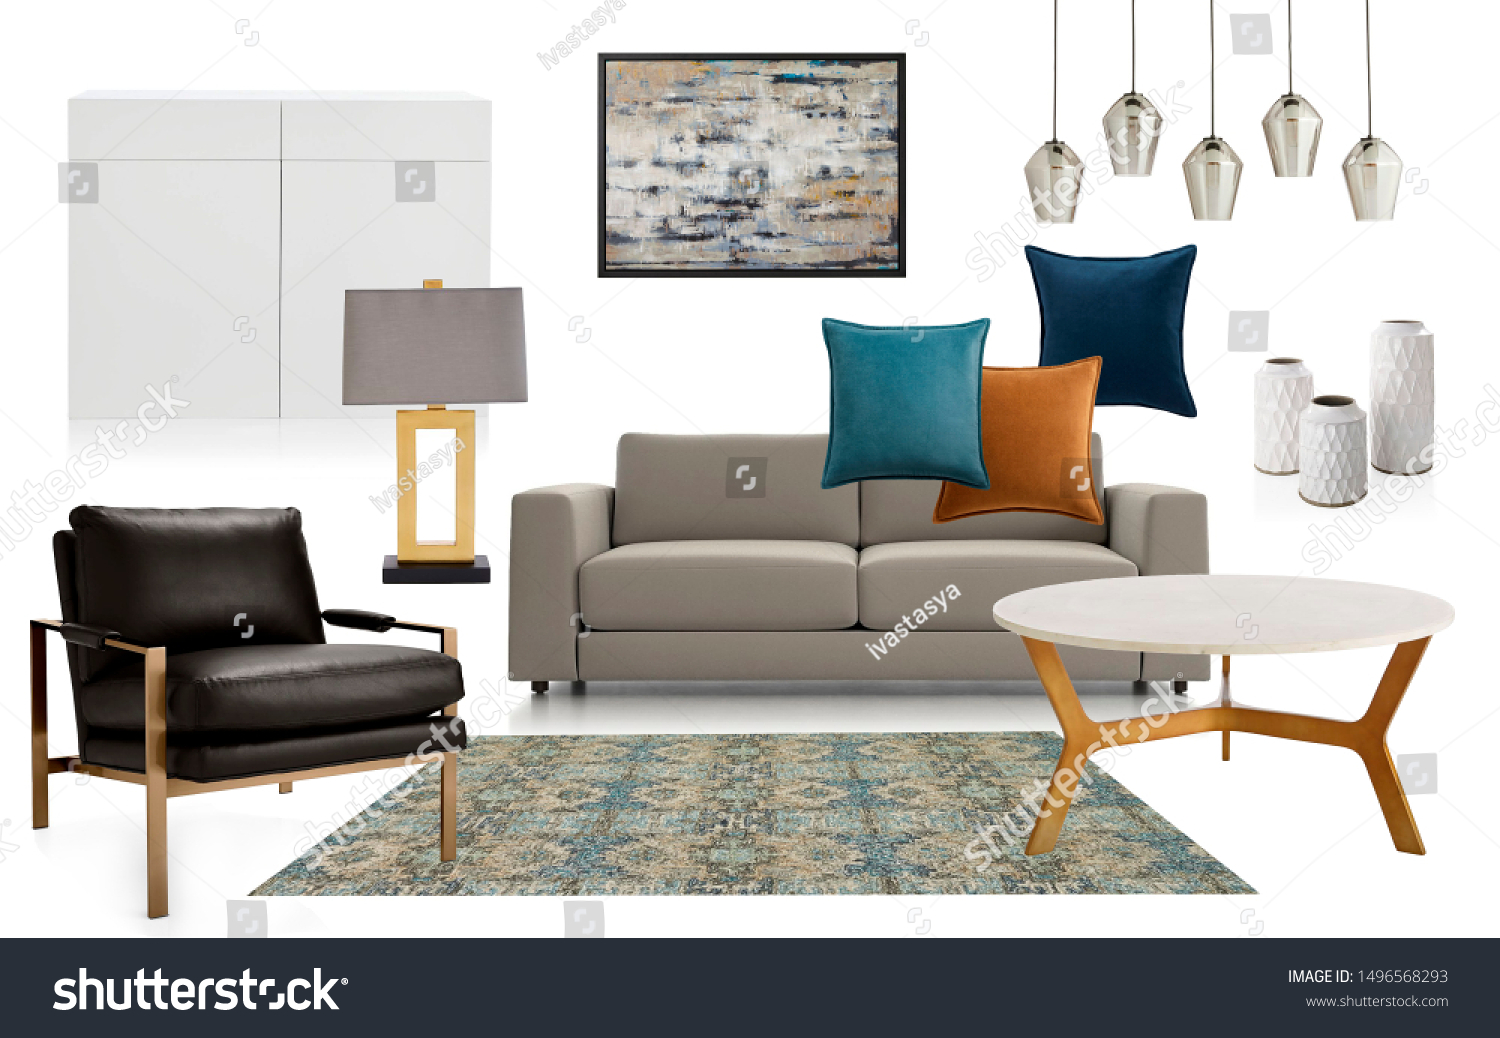 Stock Photo Interior Design Collage Mood Board Interior Of Living Room 1496568293 